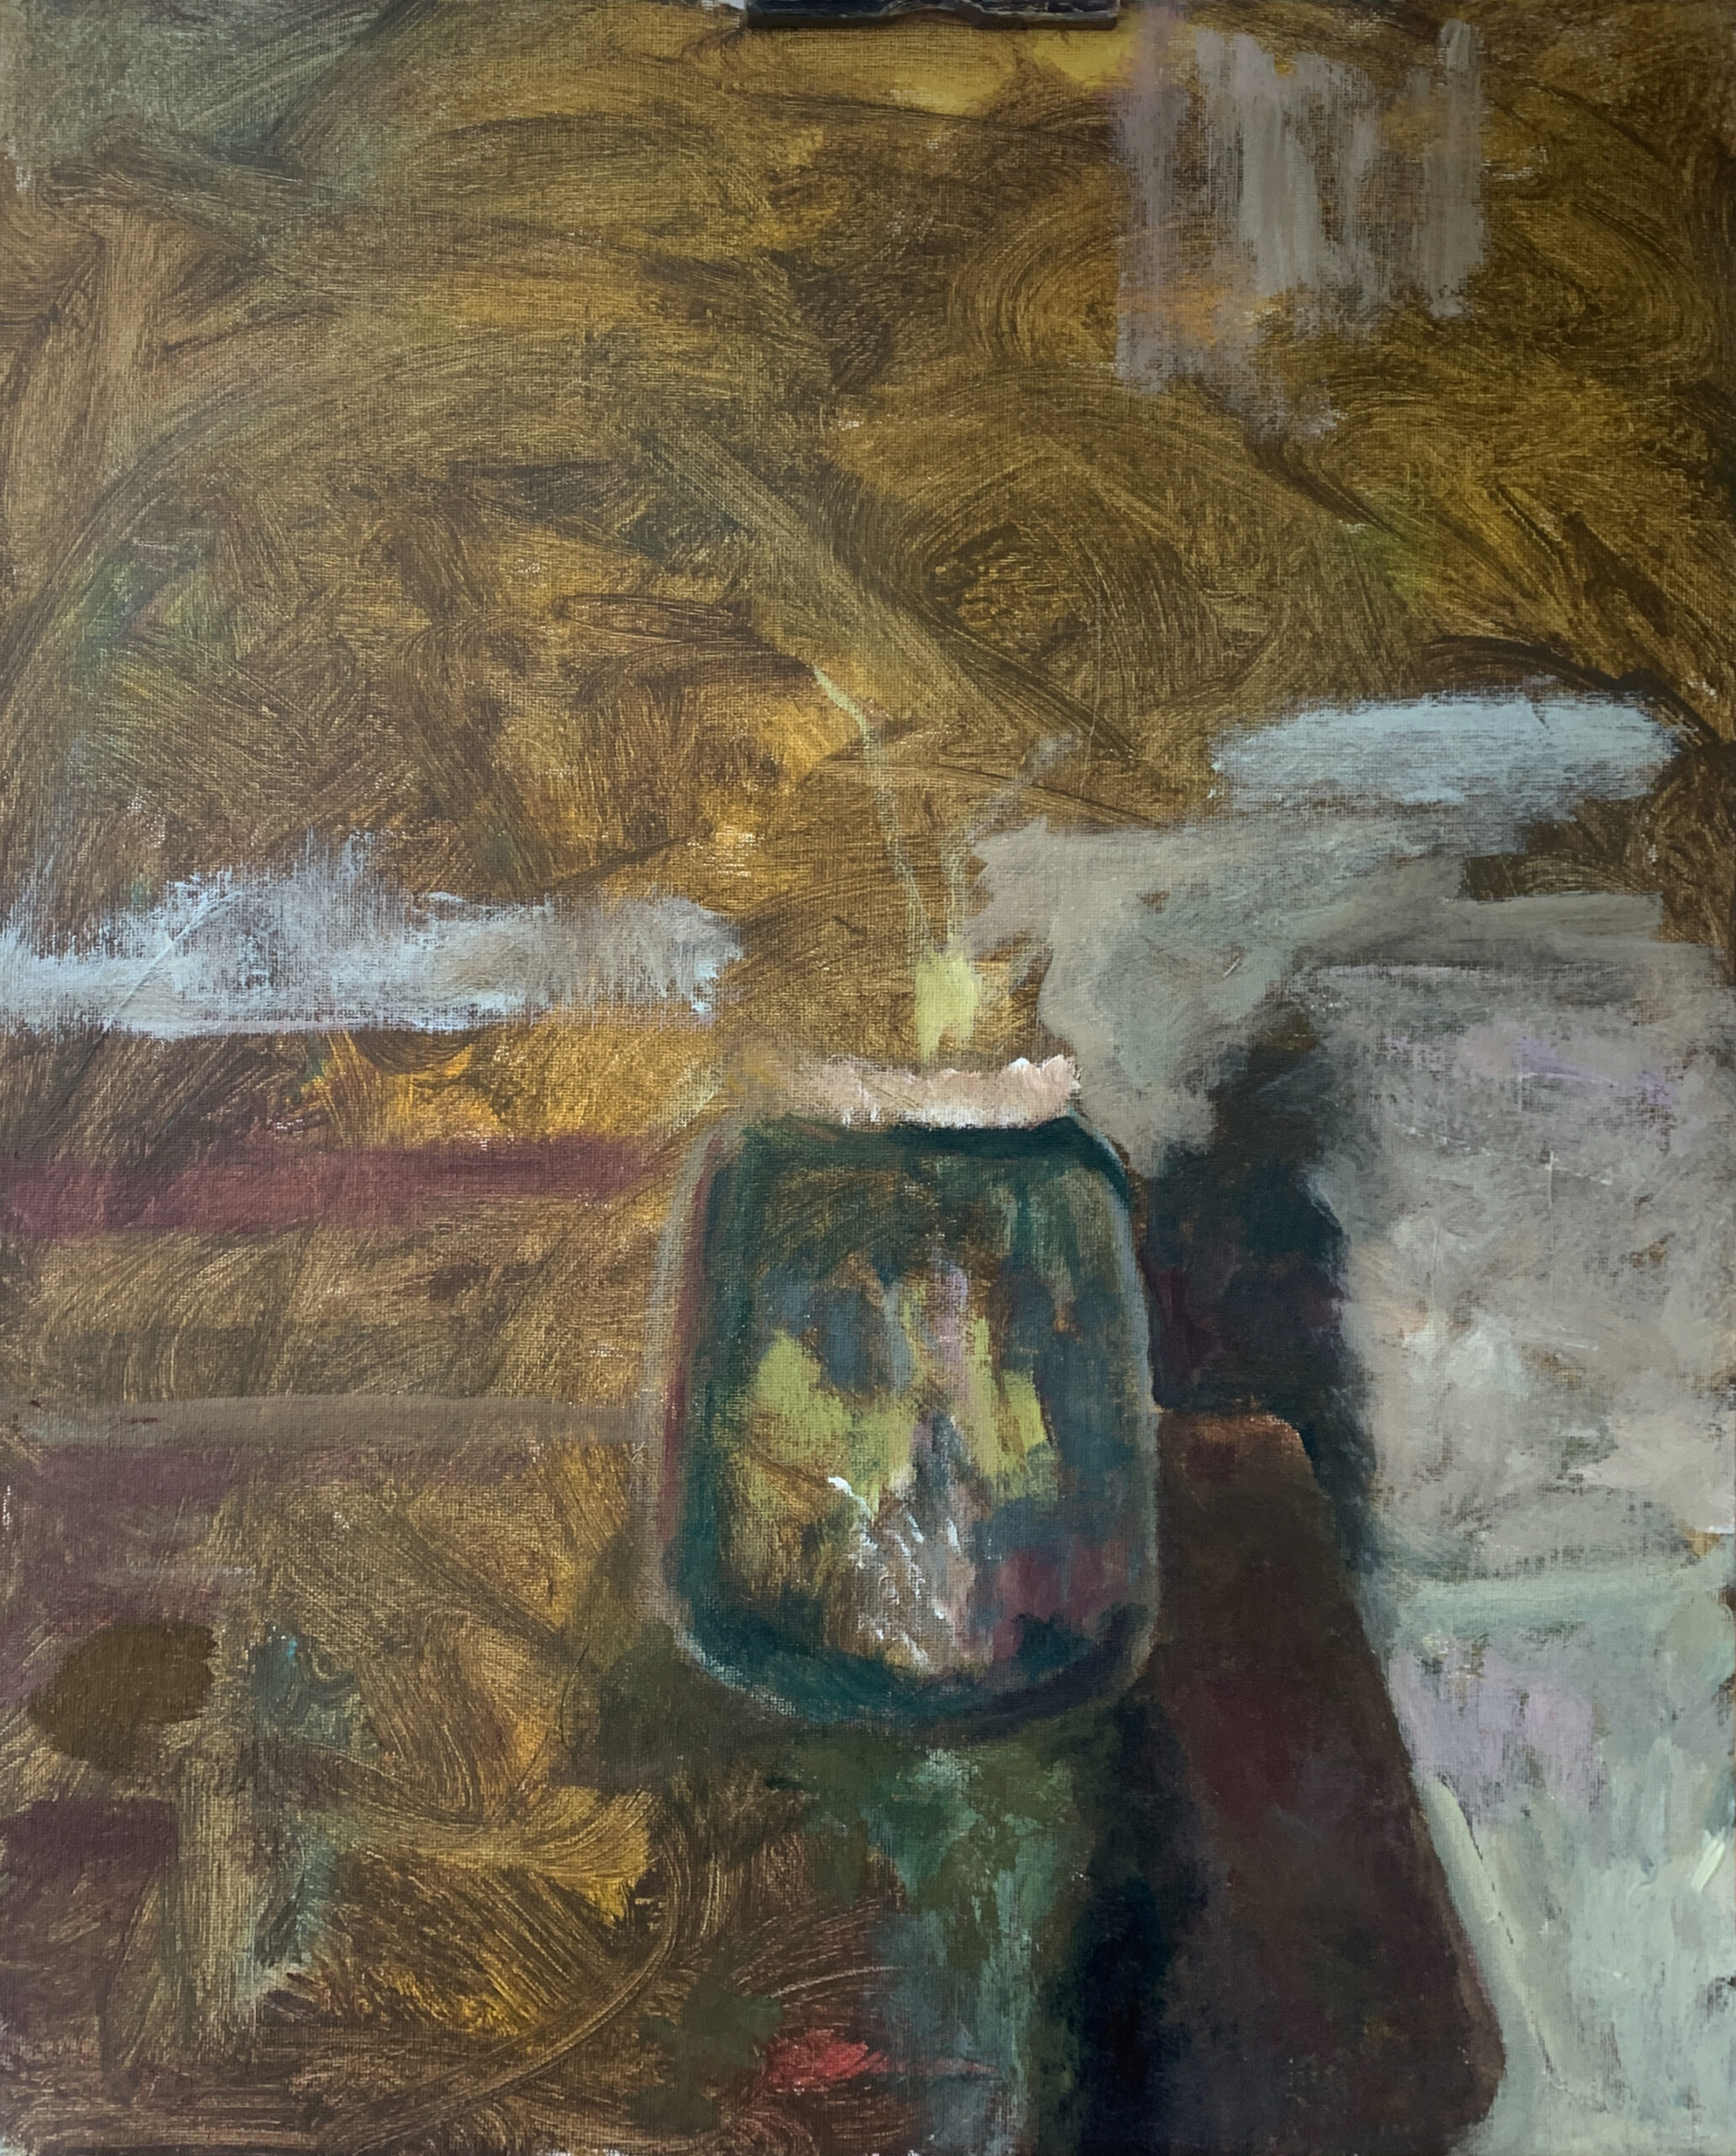 букет цветы натюрморт картина холст масло импрессионизм художник Альберт Сафиуллин